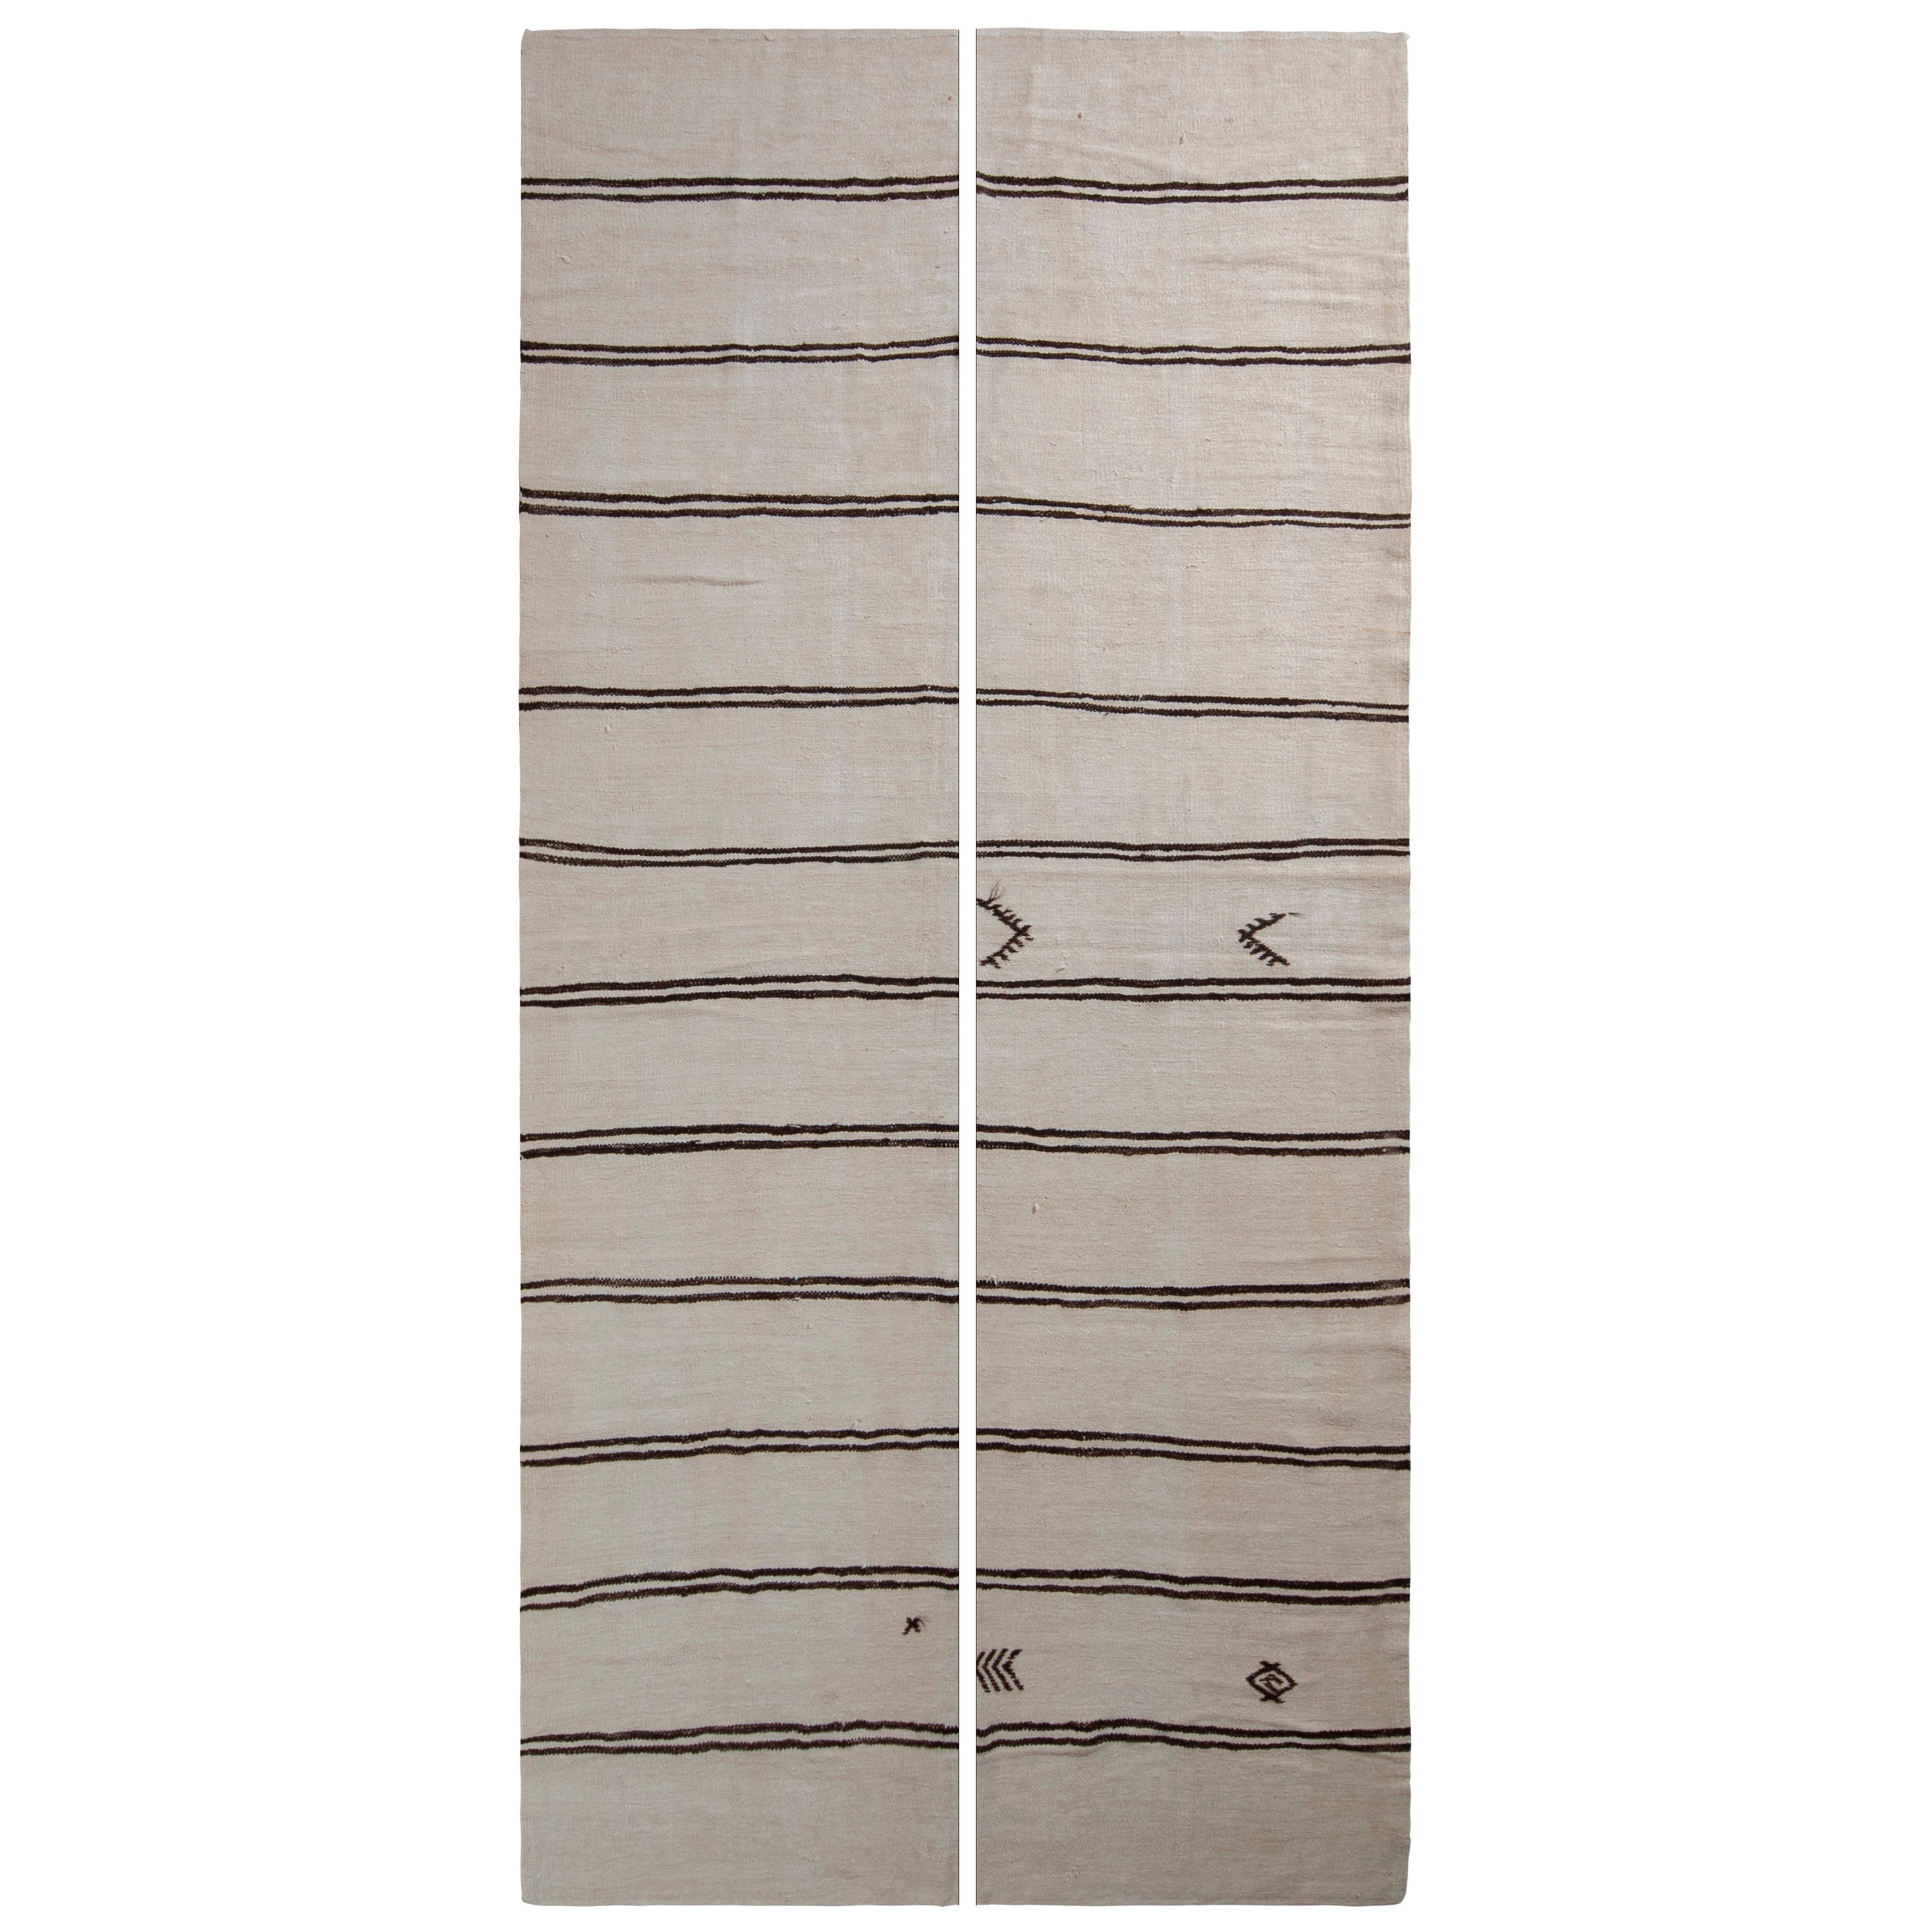 Handwoven Vintage Kilim Rug in Beige-White & Black Stripe Pattern by Rug & Kilim For Sale